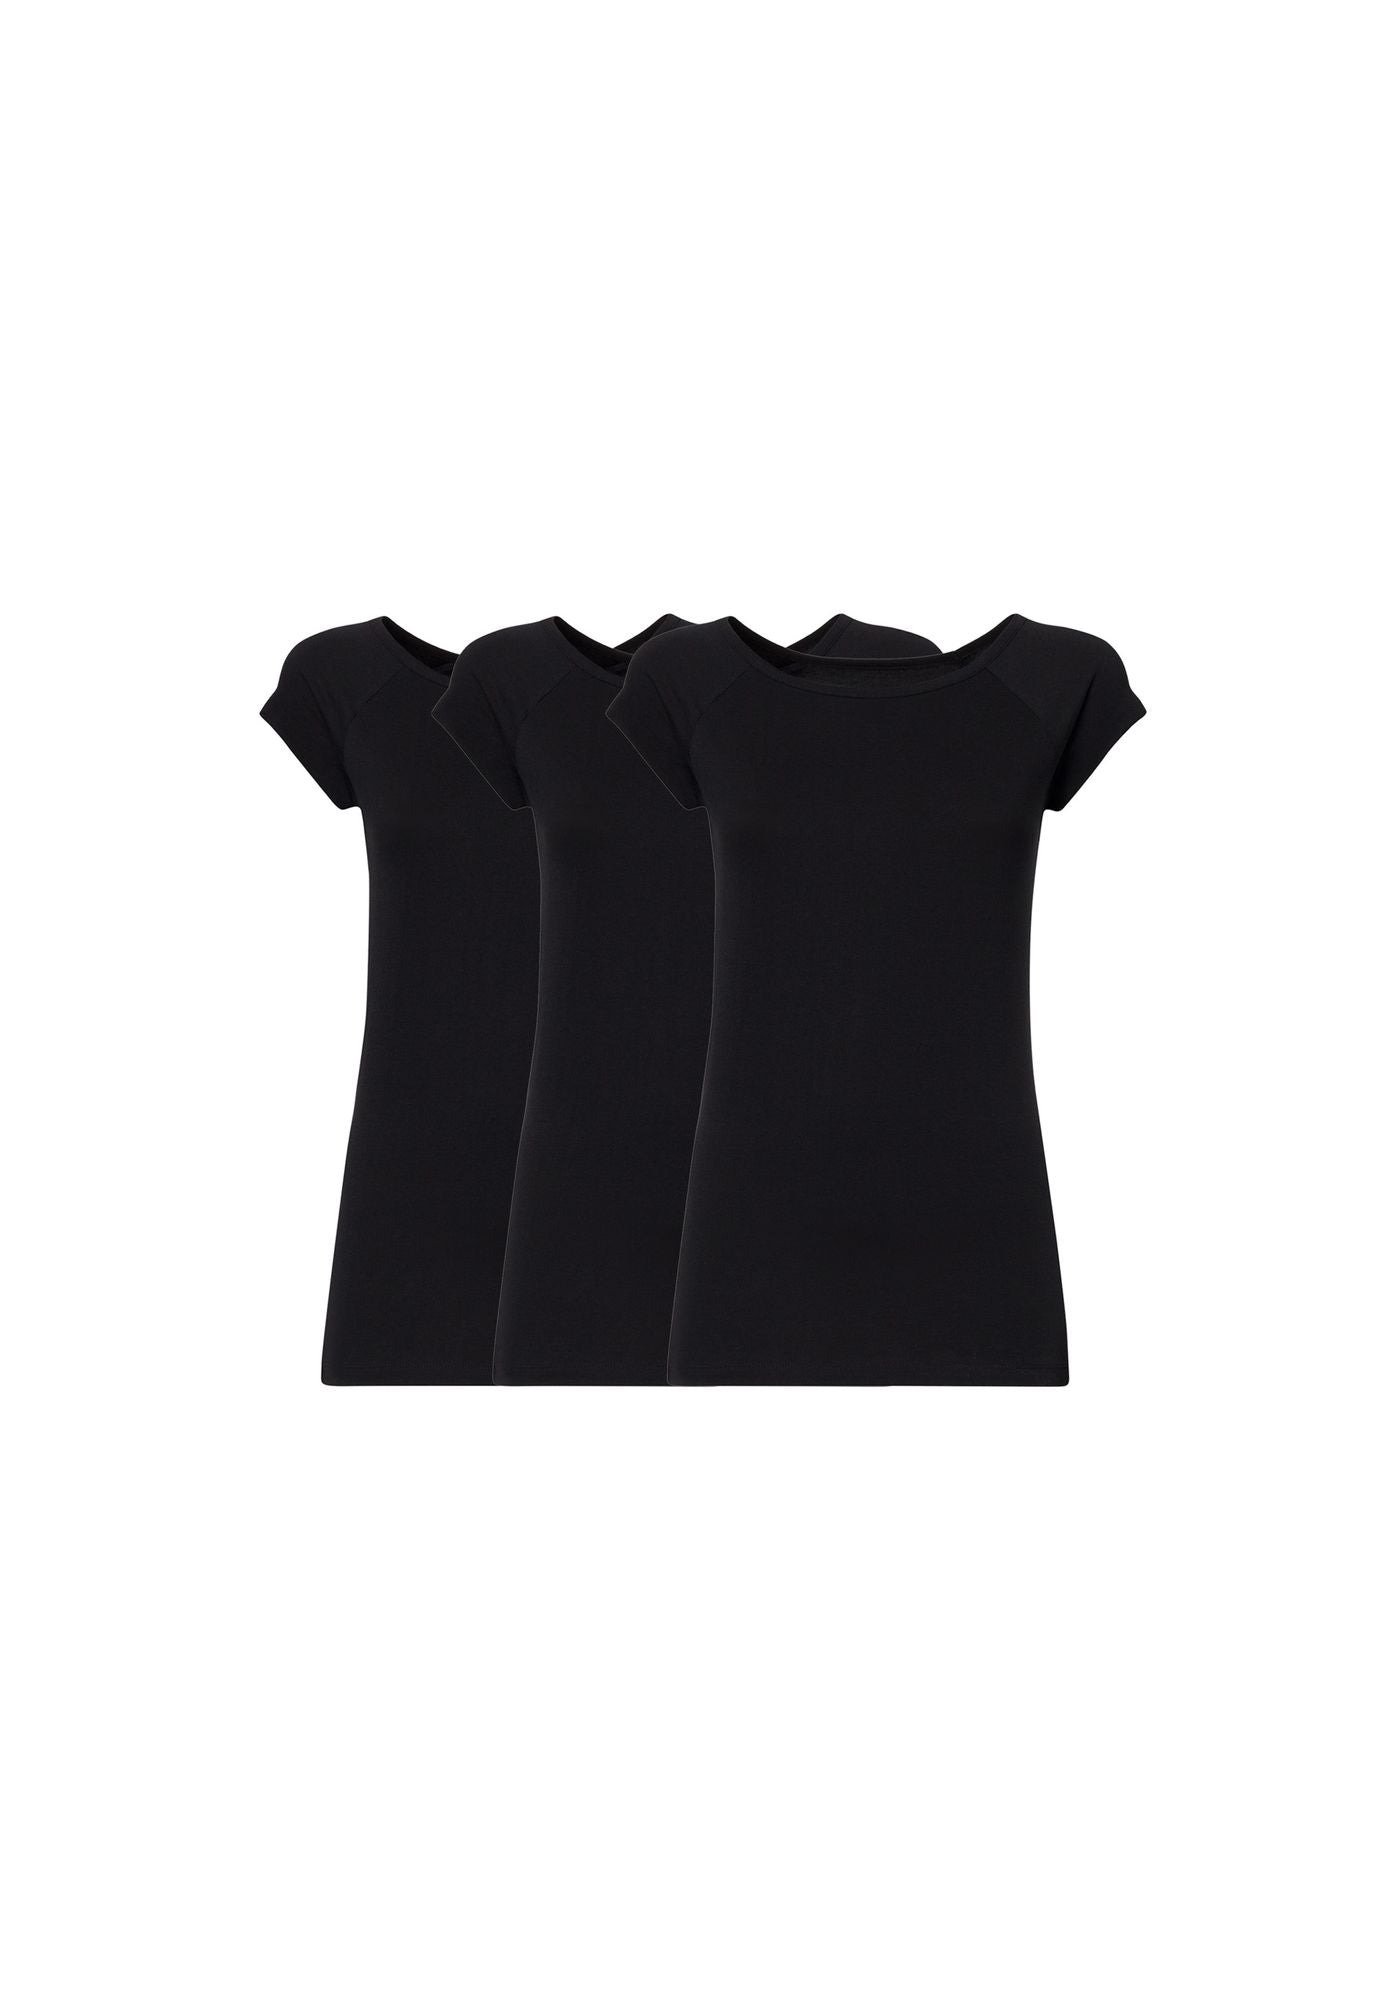 Black T-shirt 3-pack TT01 made of organic cotton from Thokkthokk